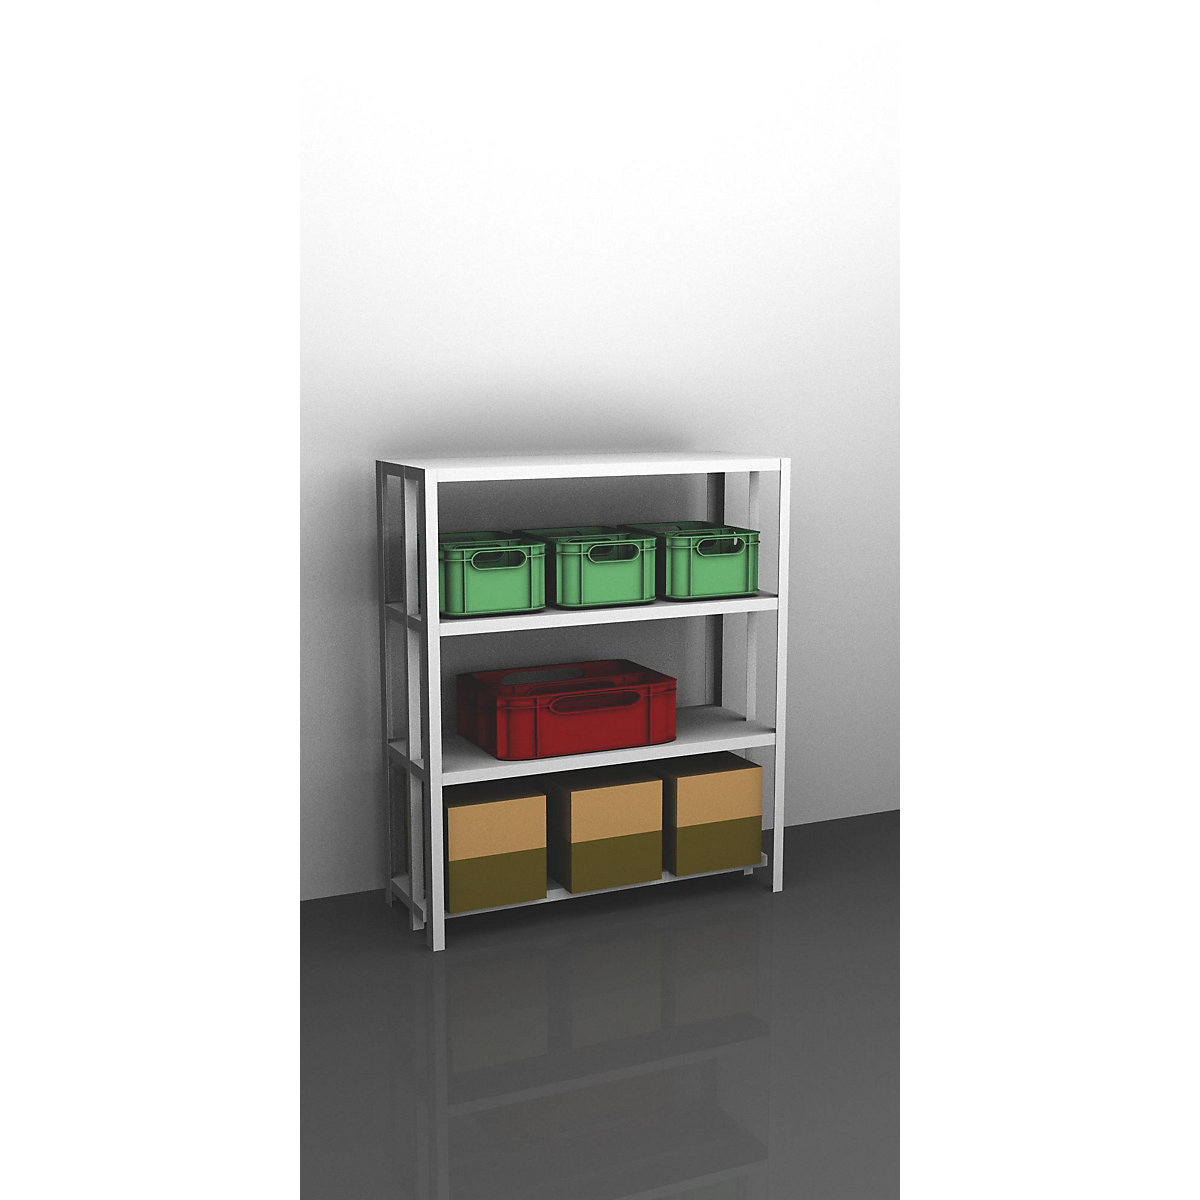 Bolt-together shelf unit, light duty, plastic coated – eurokraft pro, shelf unit height 1500 mm, shelf width 1300 mm, depth 500 mm, standard shelf unit-13